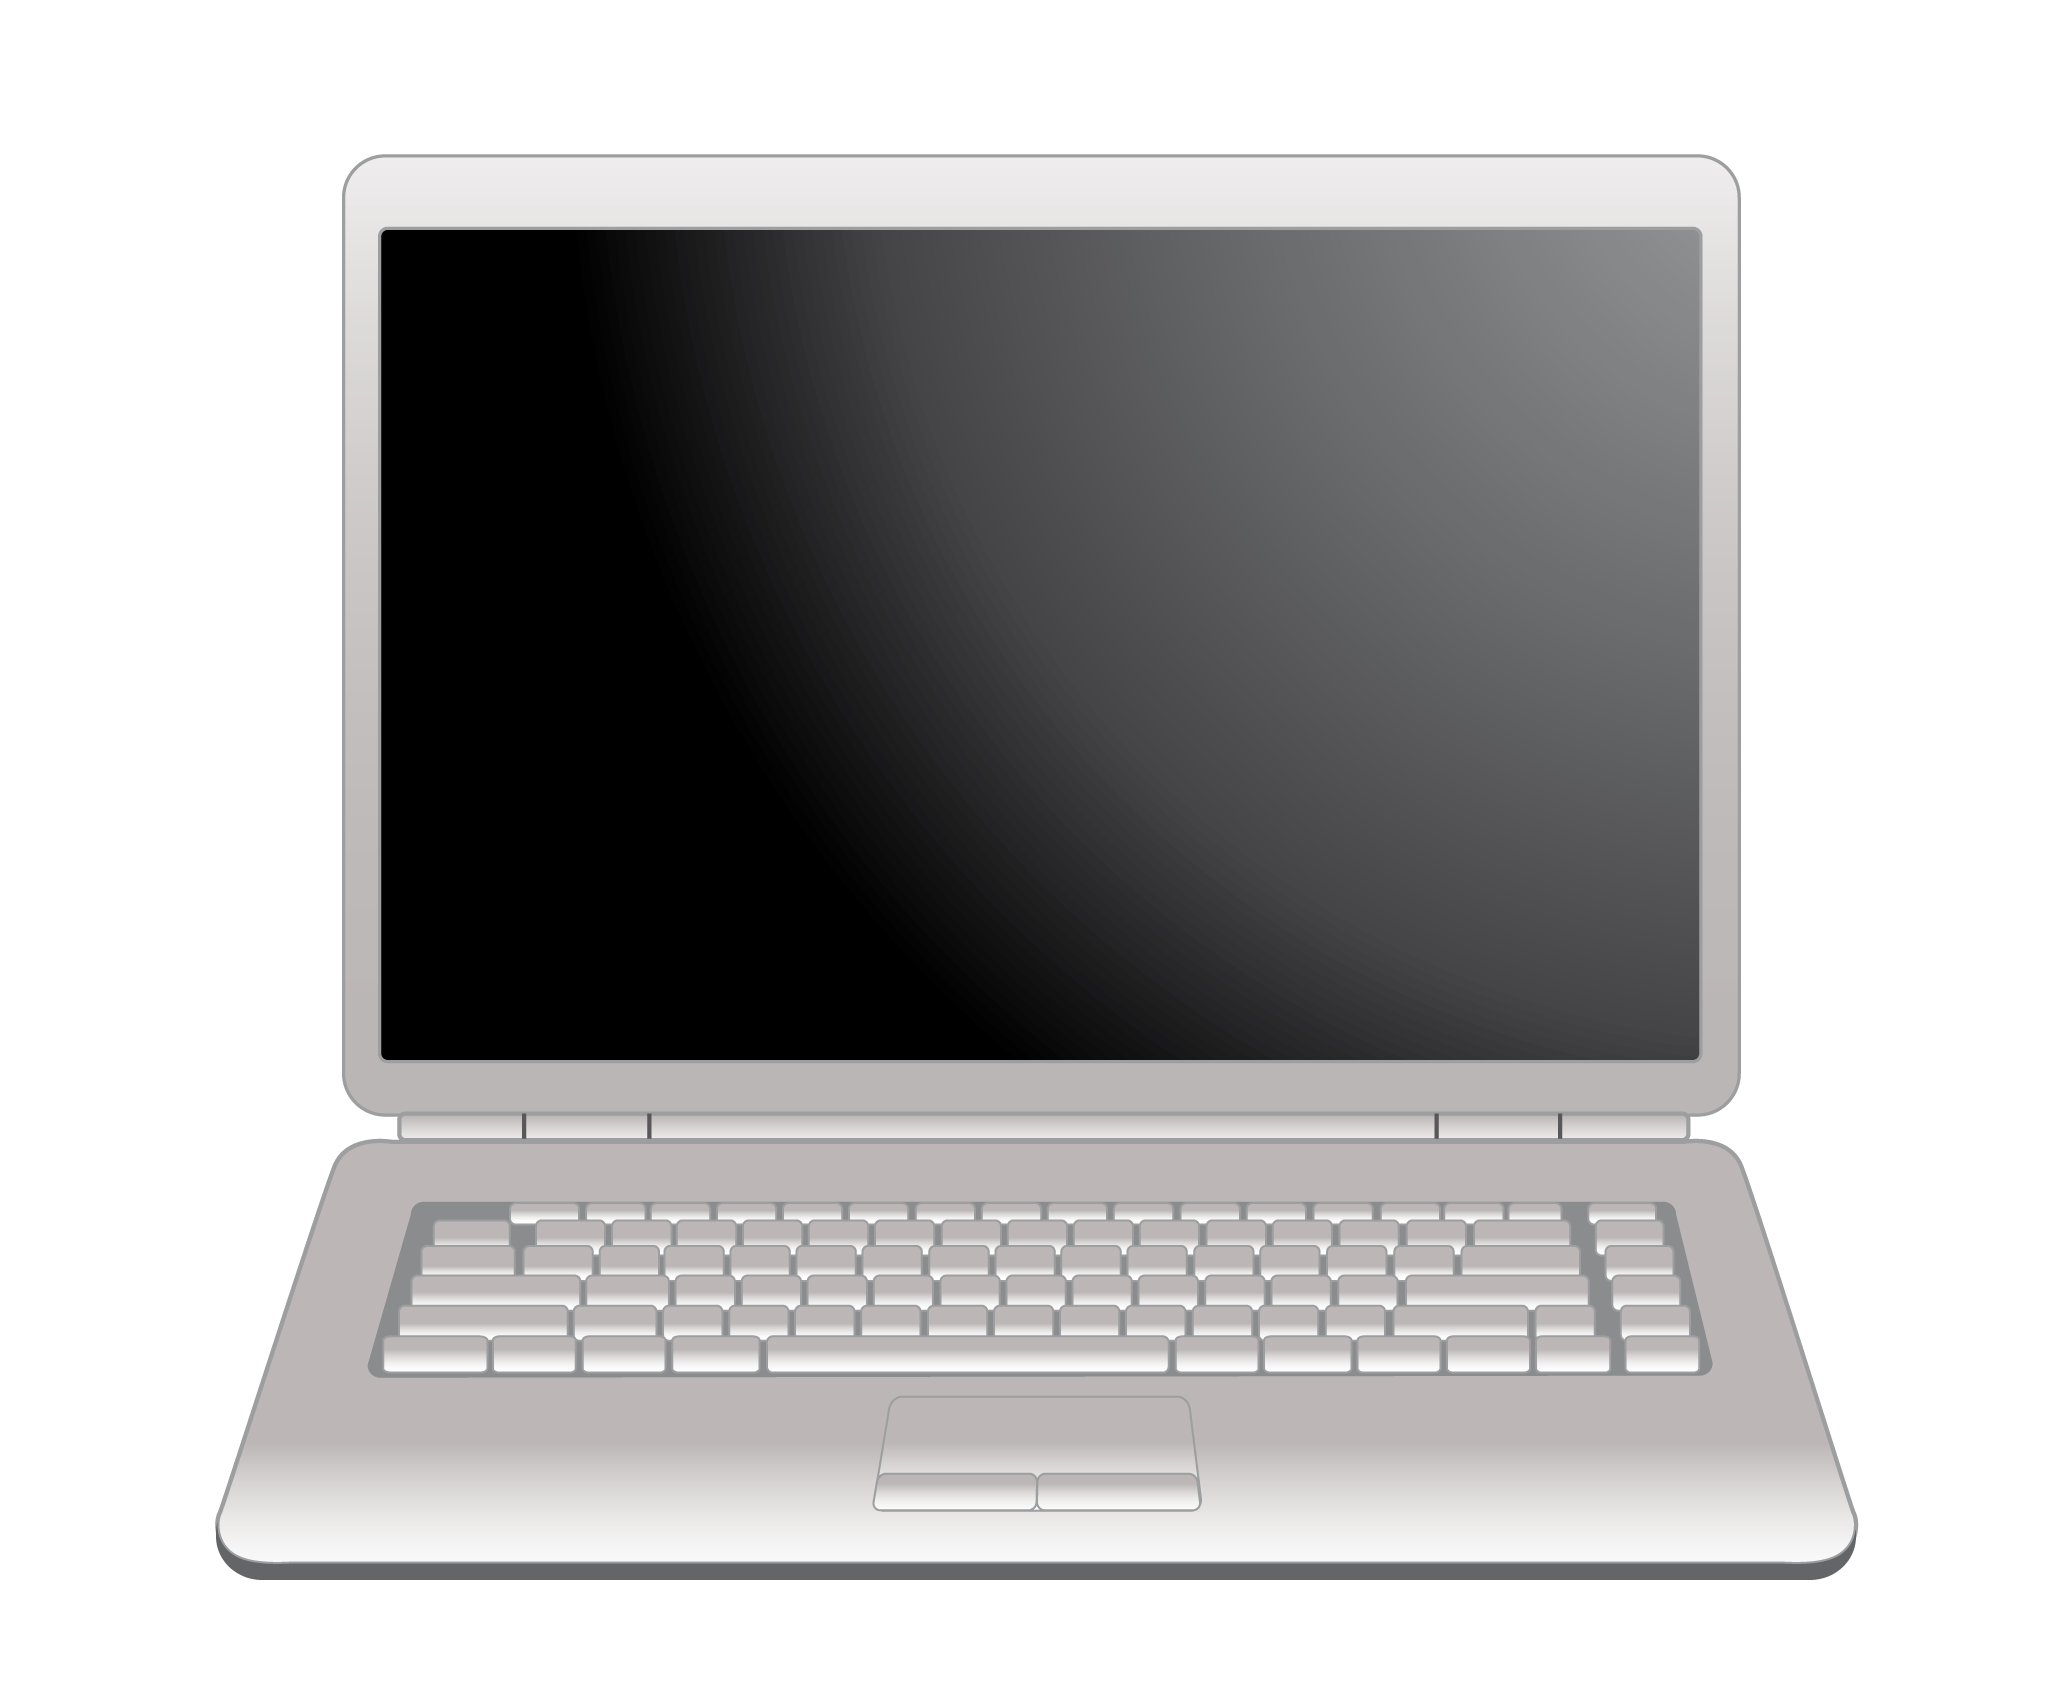 Free Laptop PNG Transparent Images, Download Free Laptop PNG